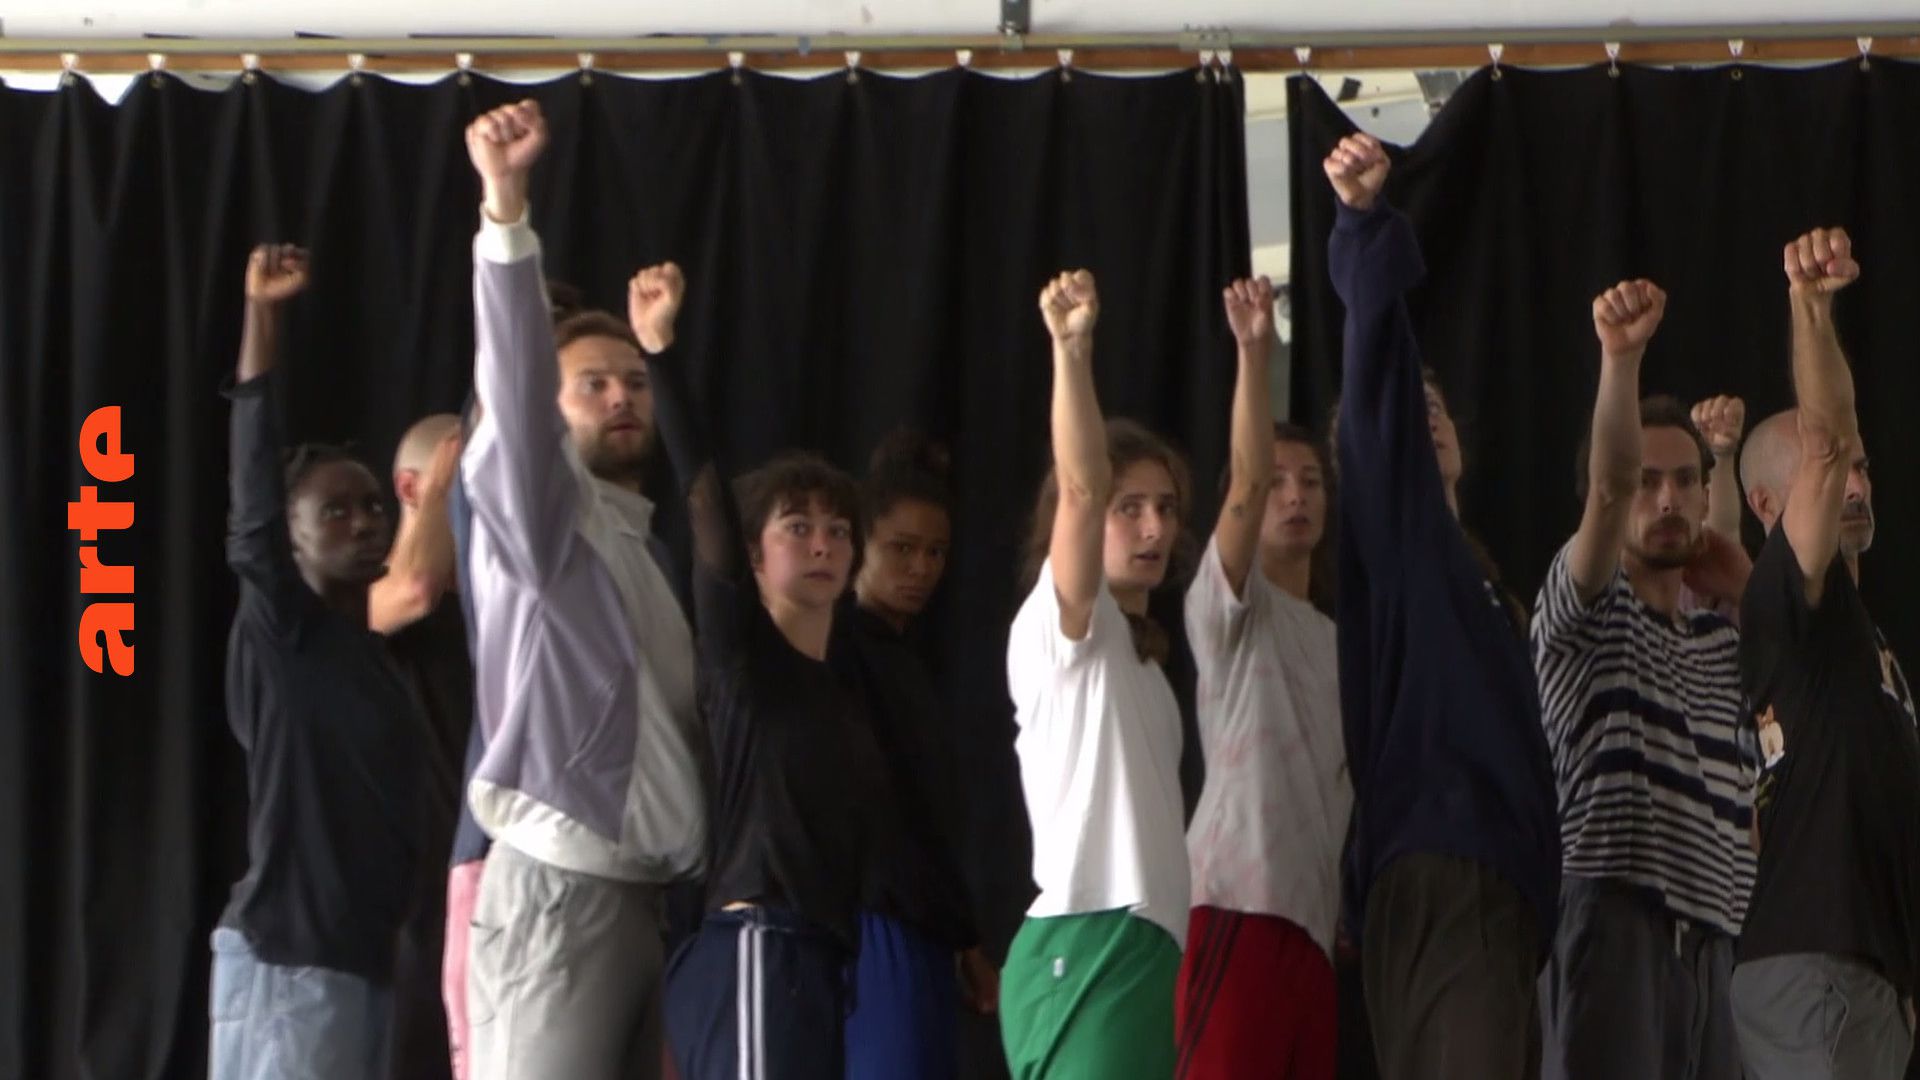 La danse viscérale d'Oona Doherty - Regarder le documentaire complet | ARTE